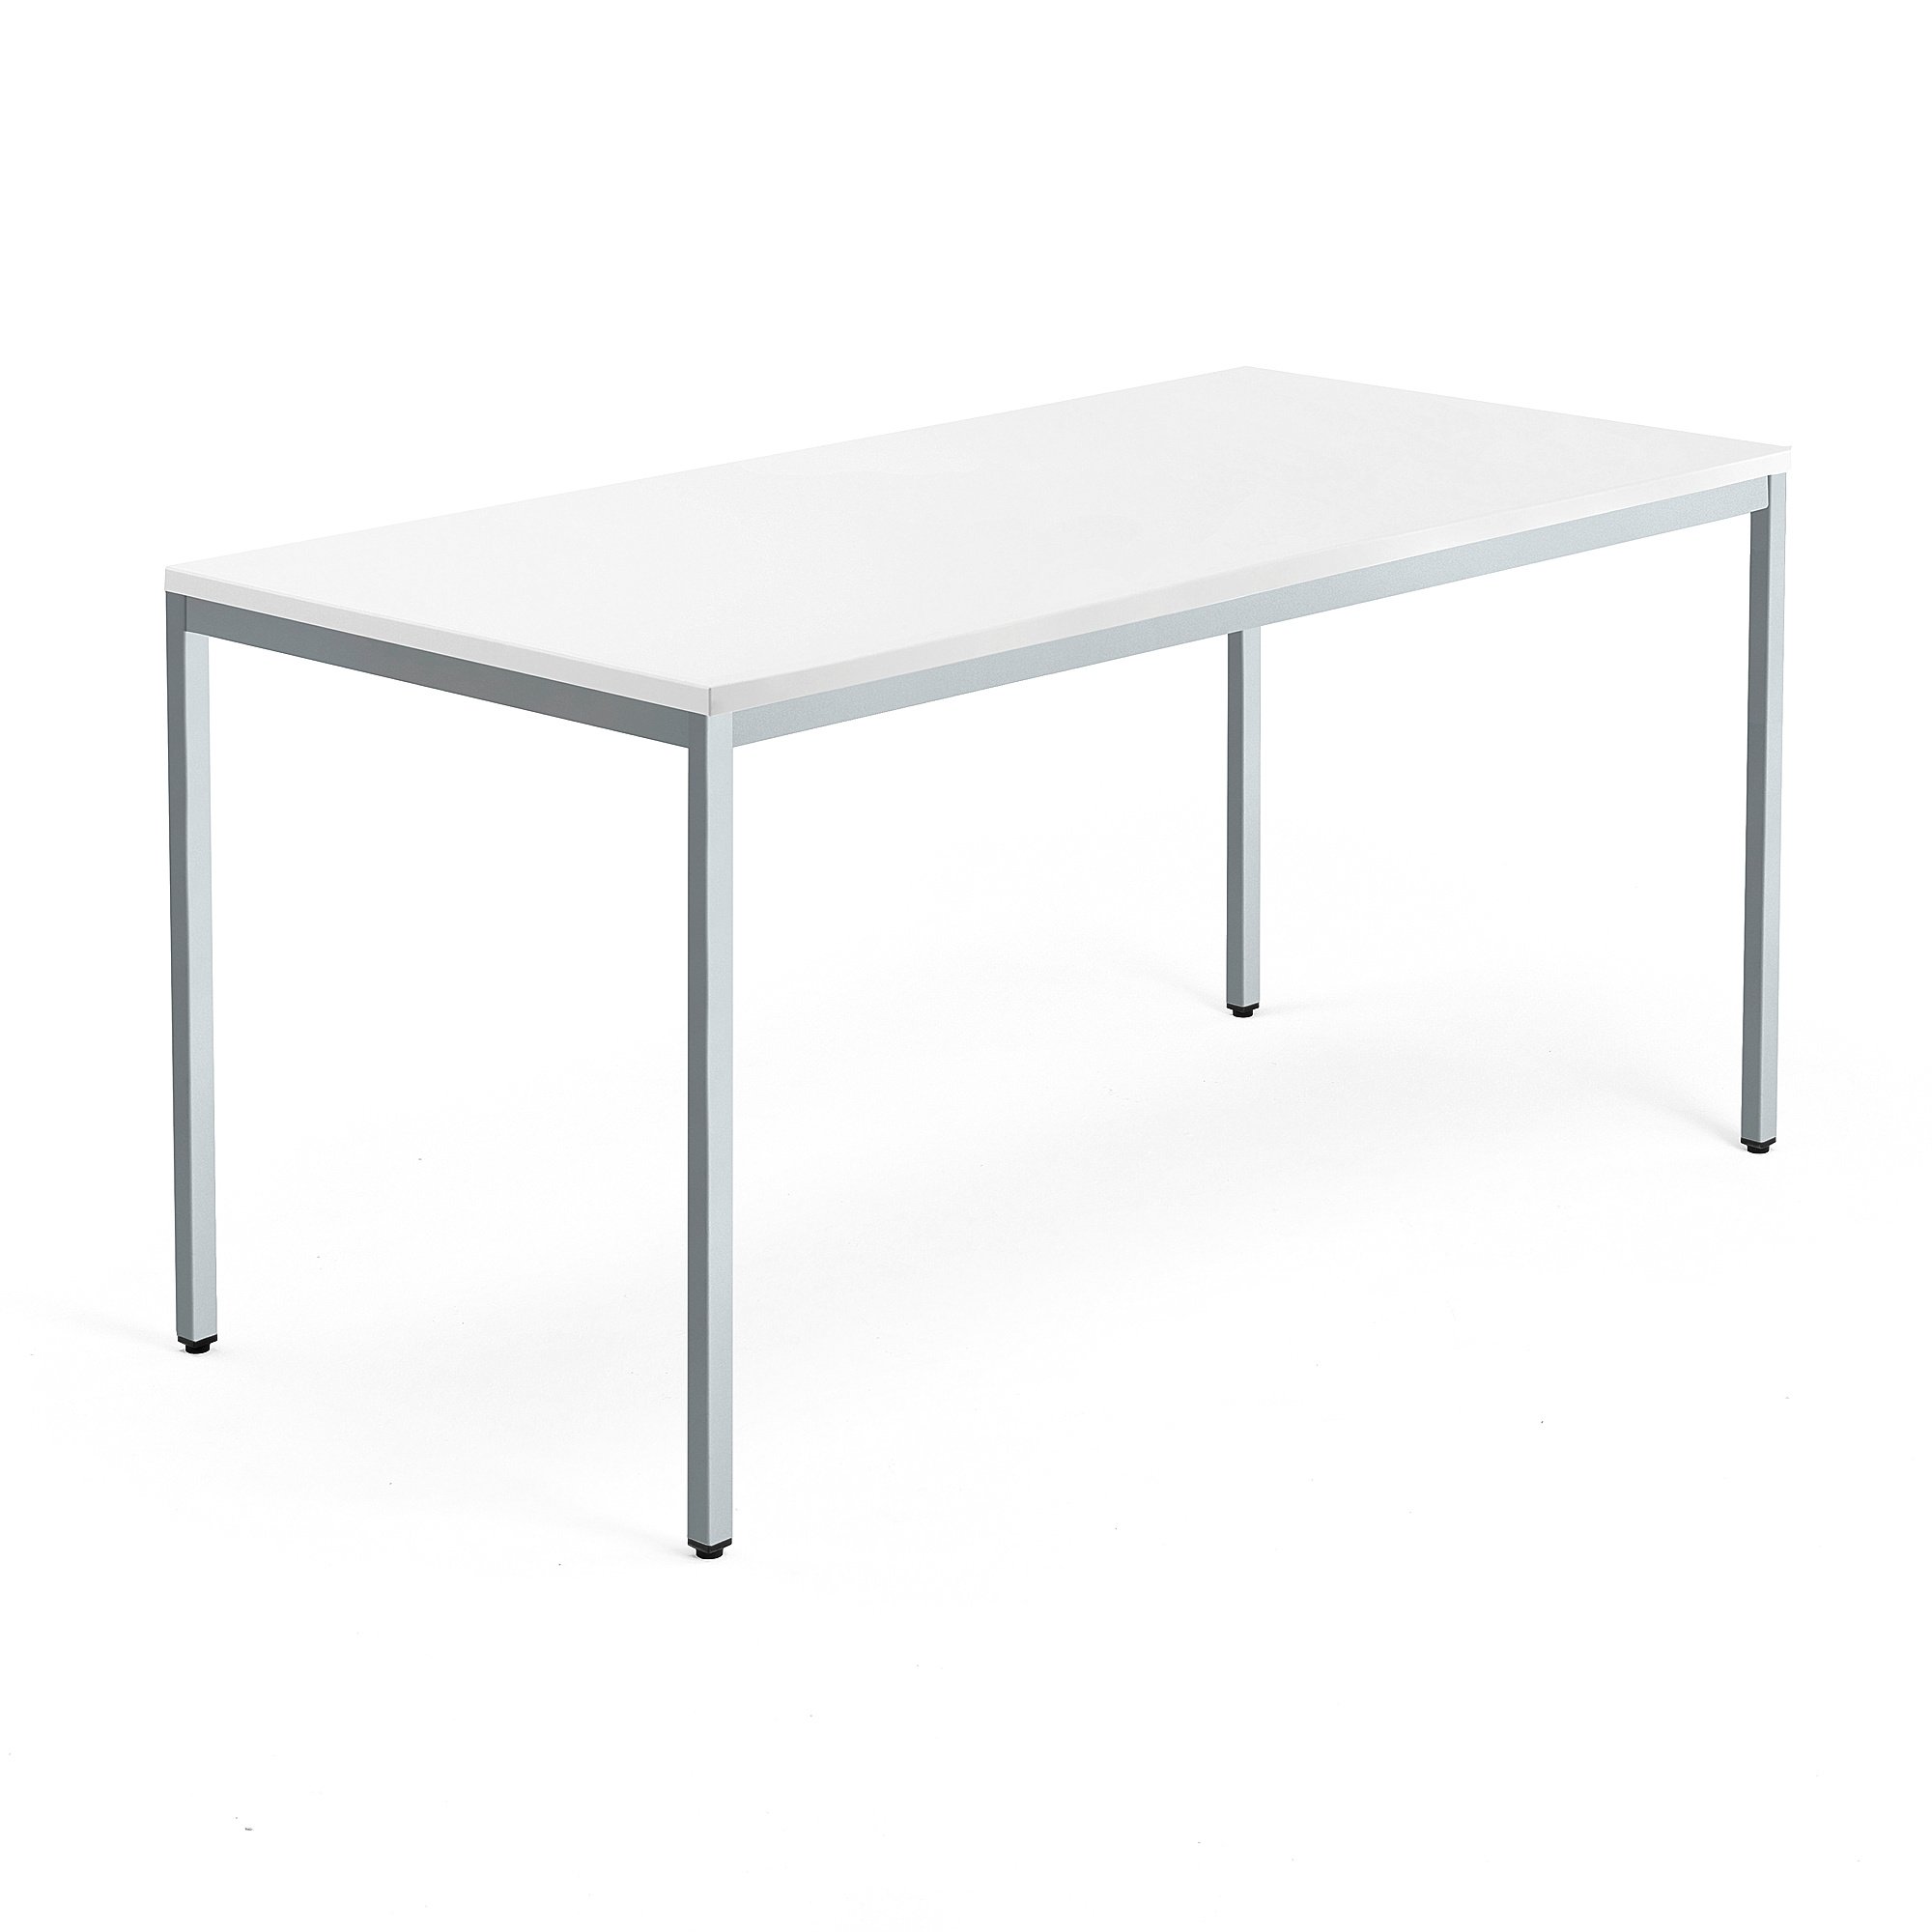 Psací stůl QBUS, 4 nohy, 1600x800 mm, stříbrný rám, bílá